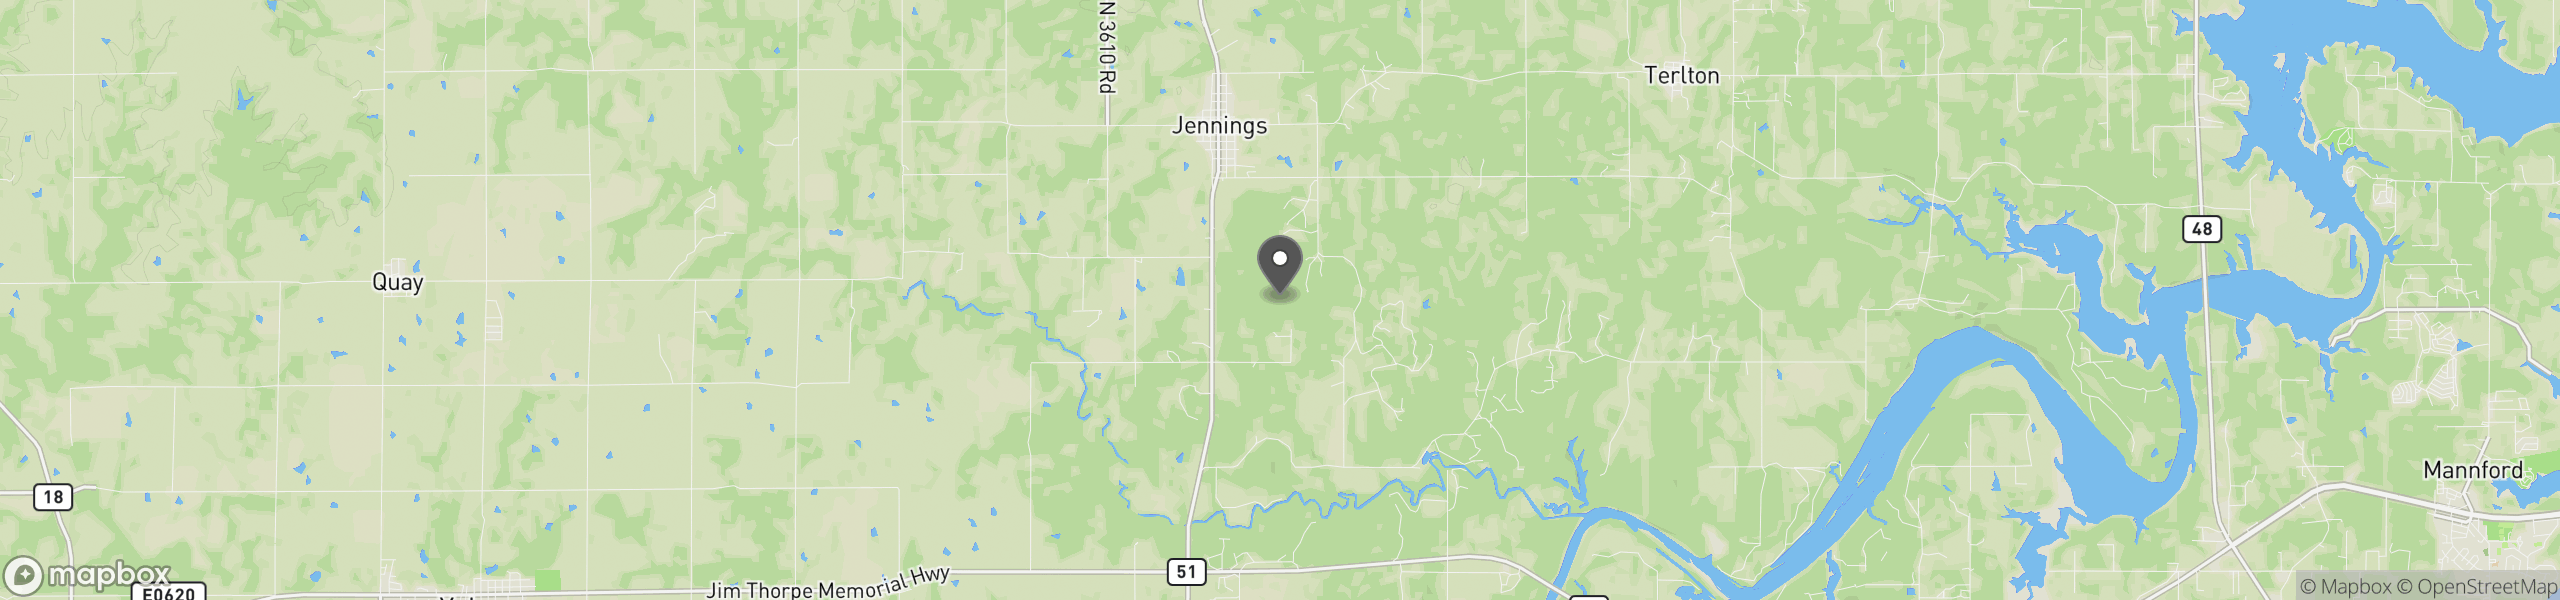 Jennings, OK 74038